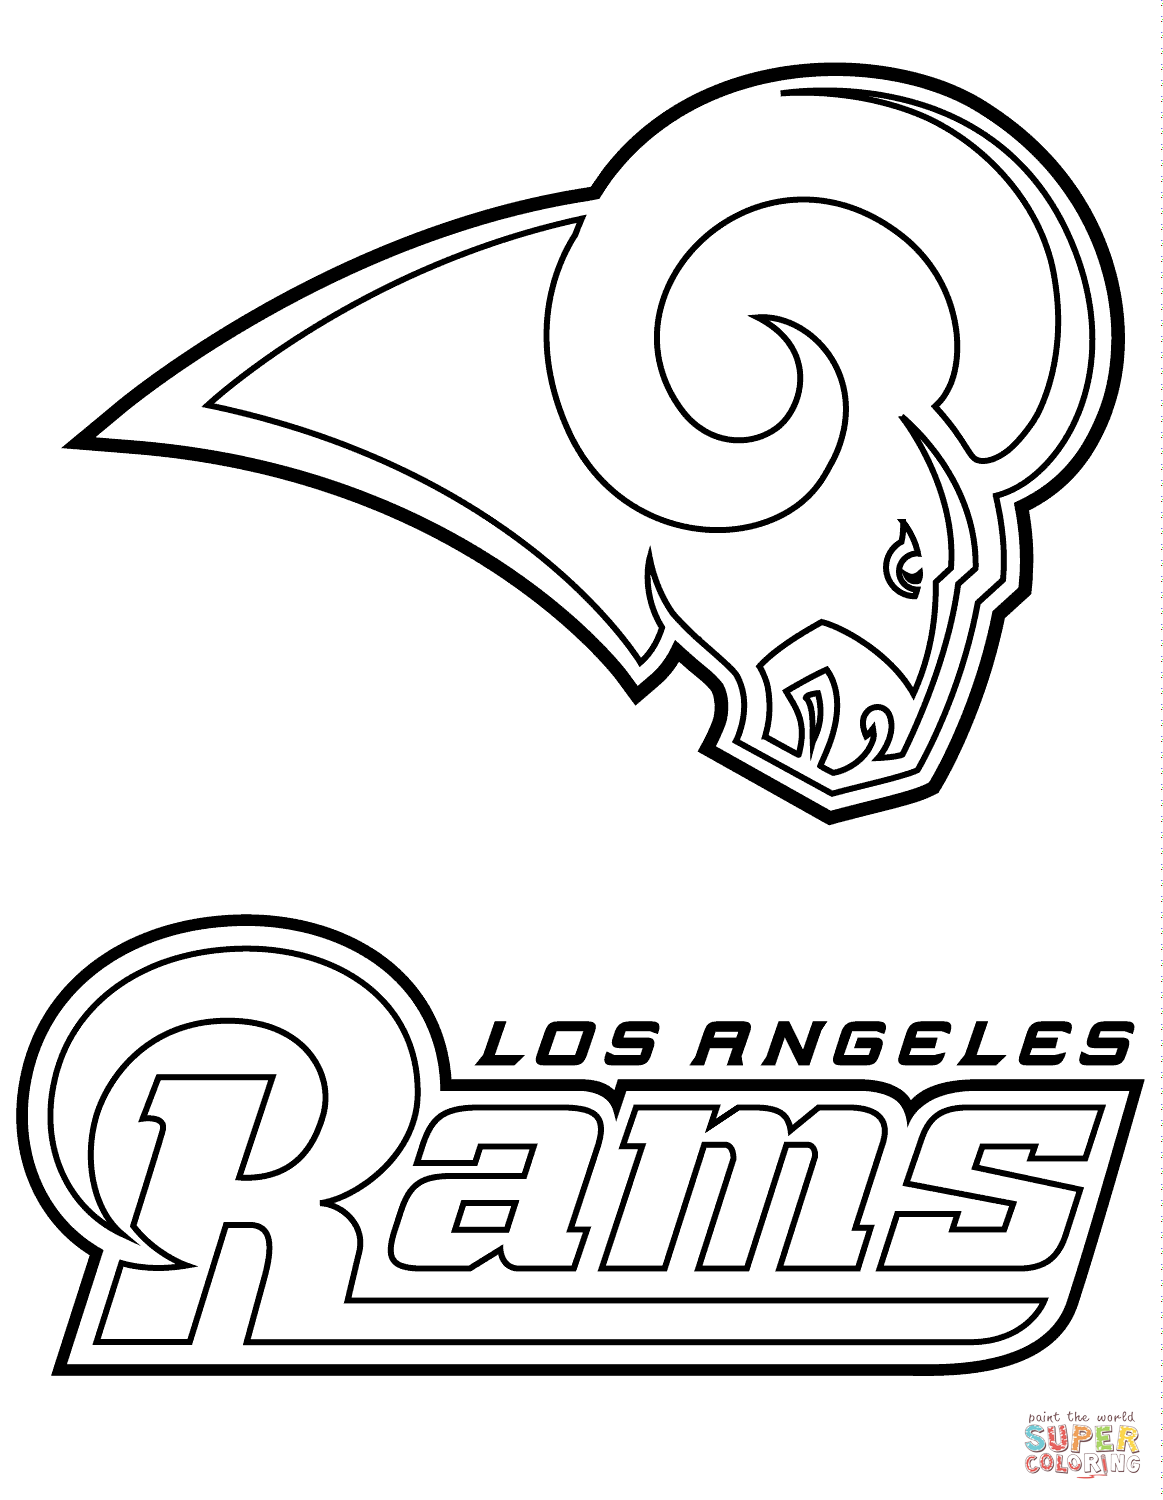 Los Angeles Rams Logo coloring page | Free Printable ...